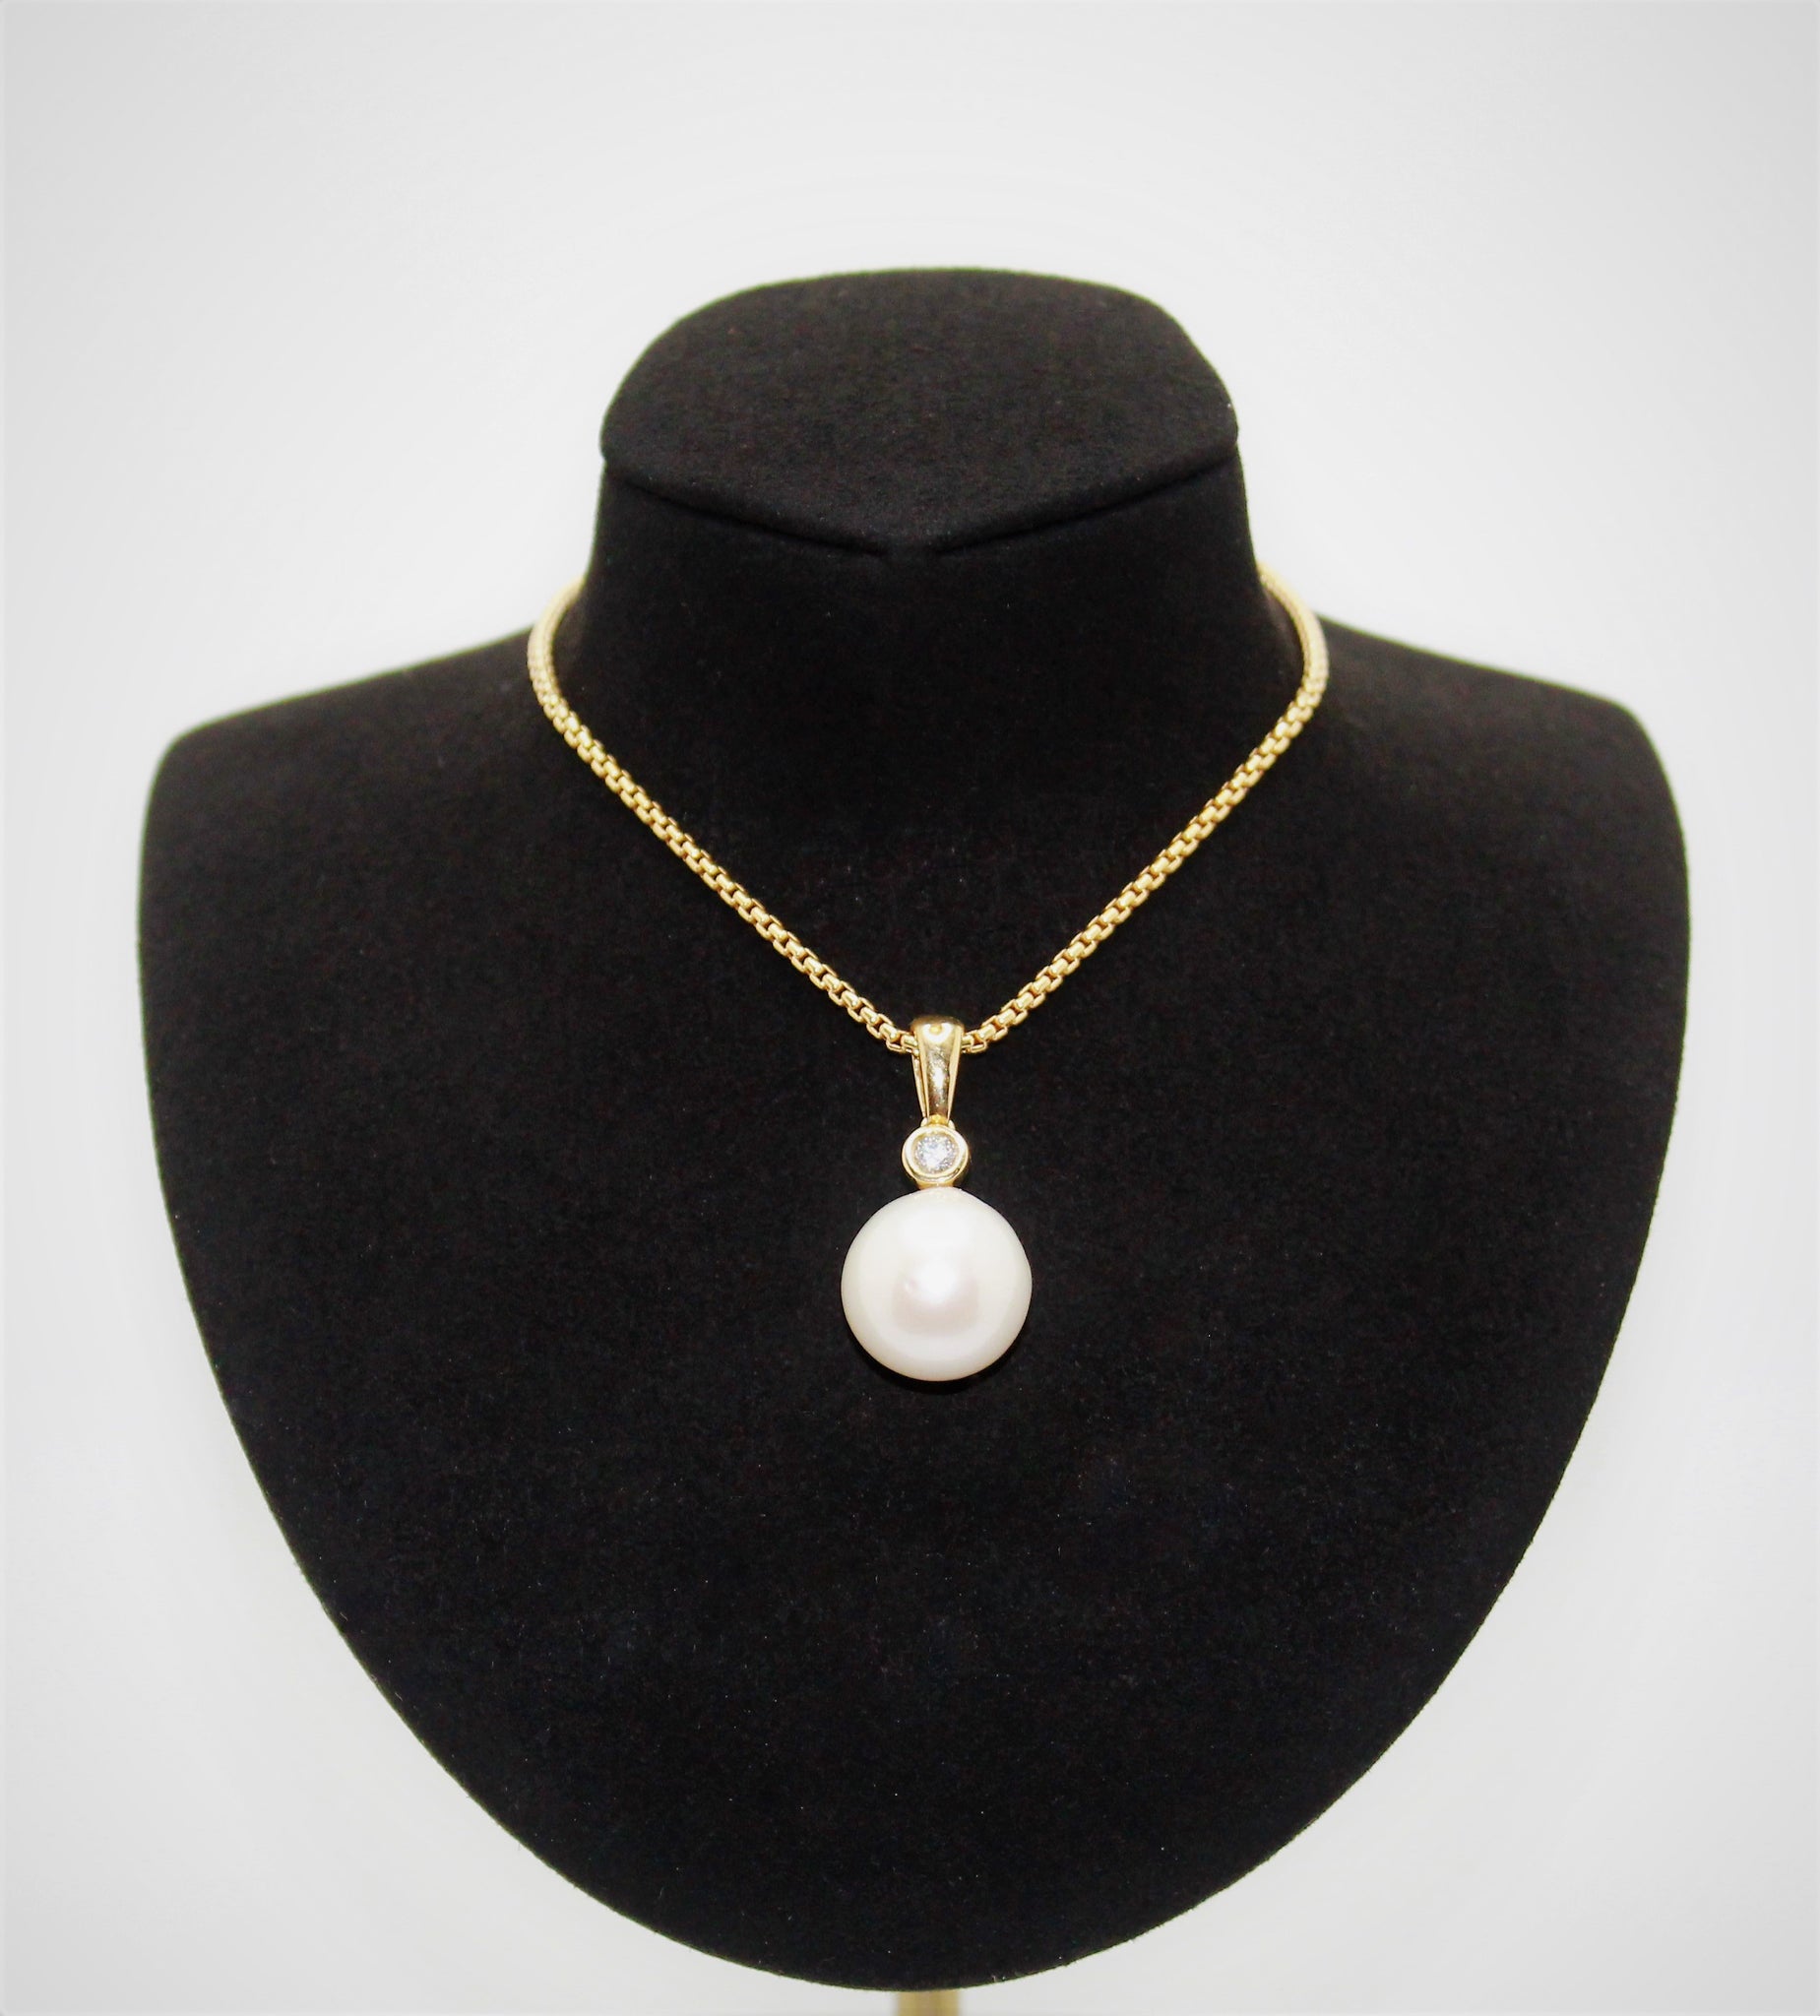 Australian pearl pendant